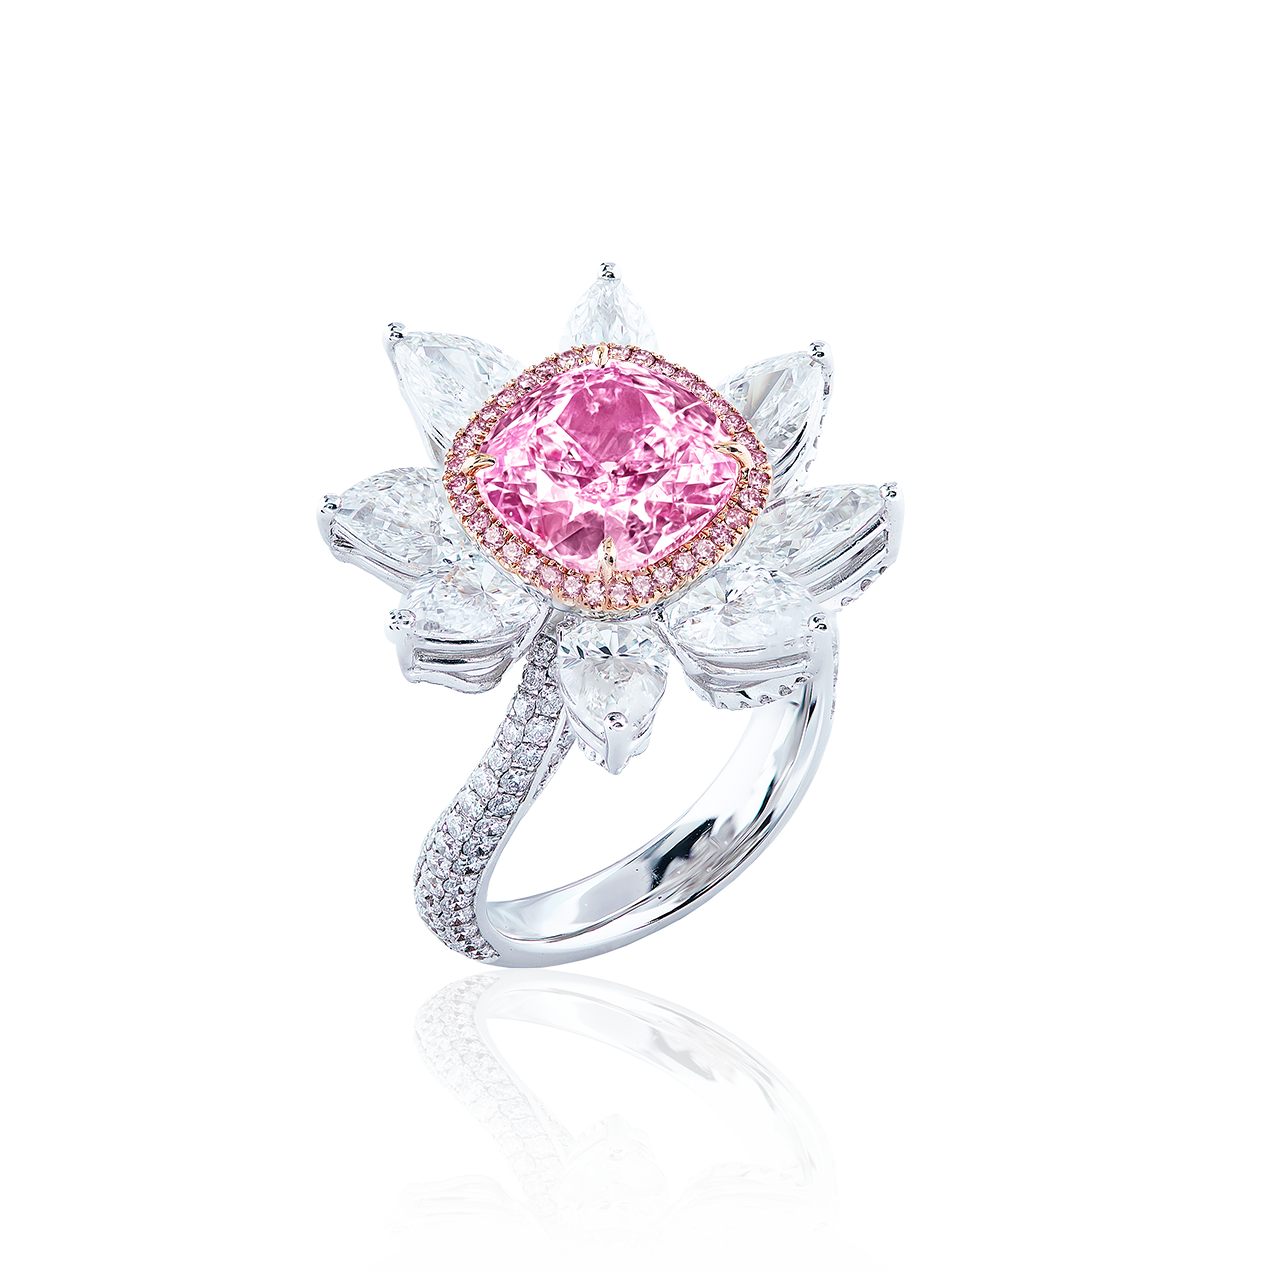 GIA 3.18克拉 粉鑽鑽戒
Very Light Pink Colored Diamond
and Diamond Ring